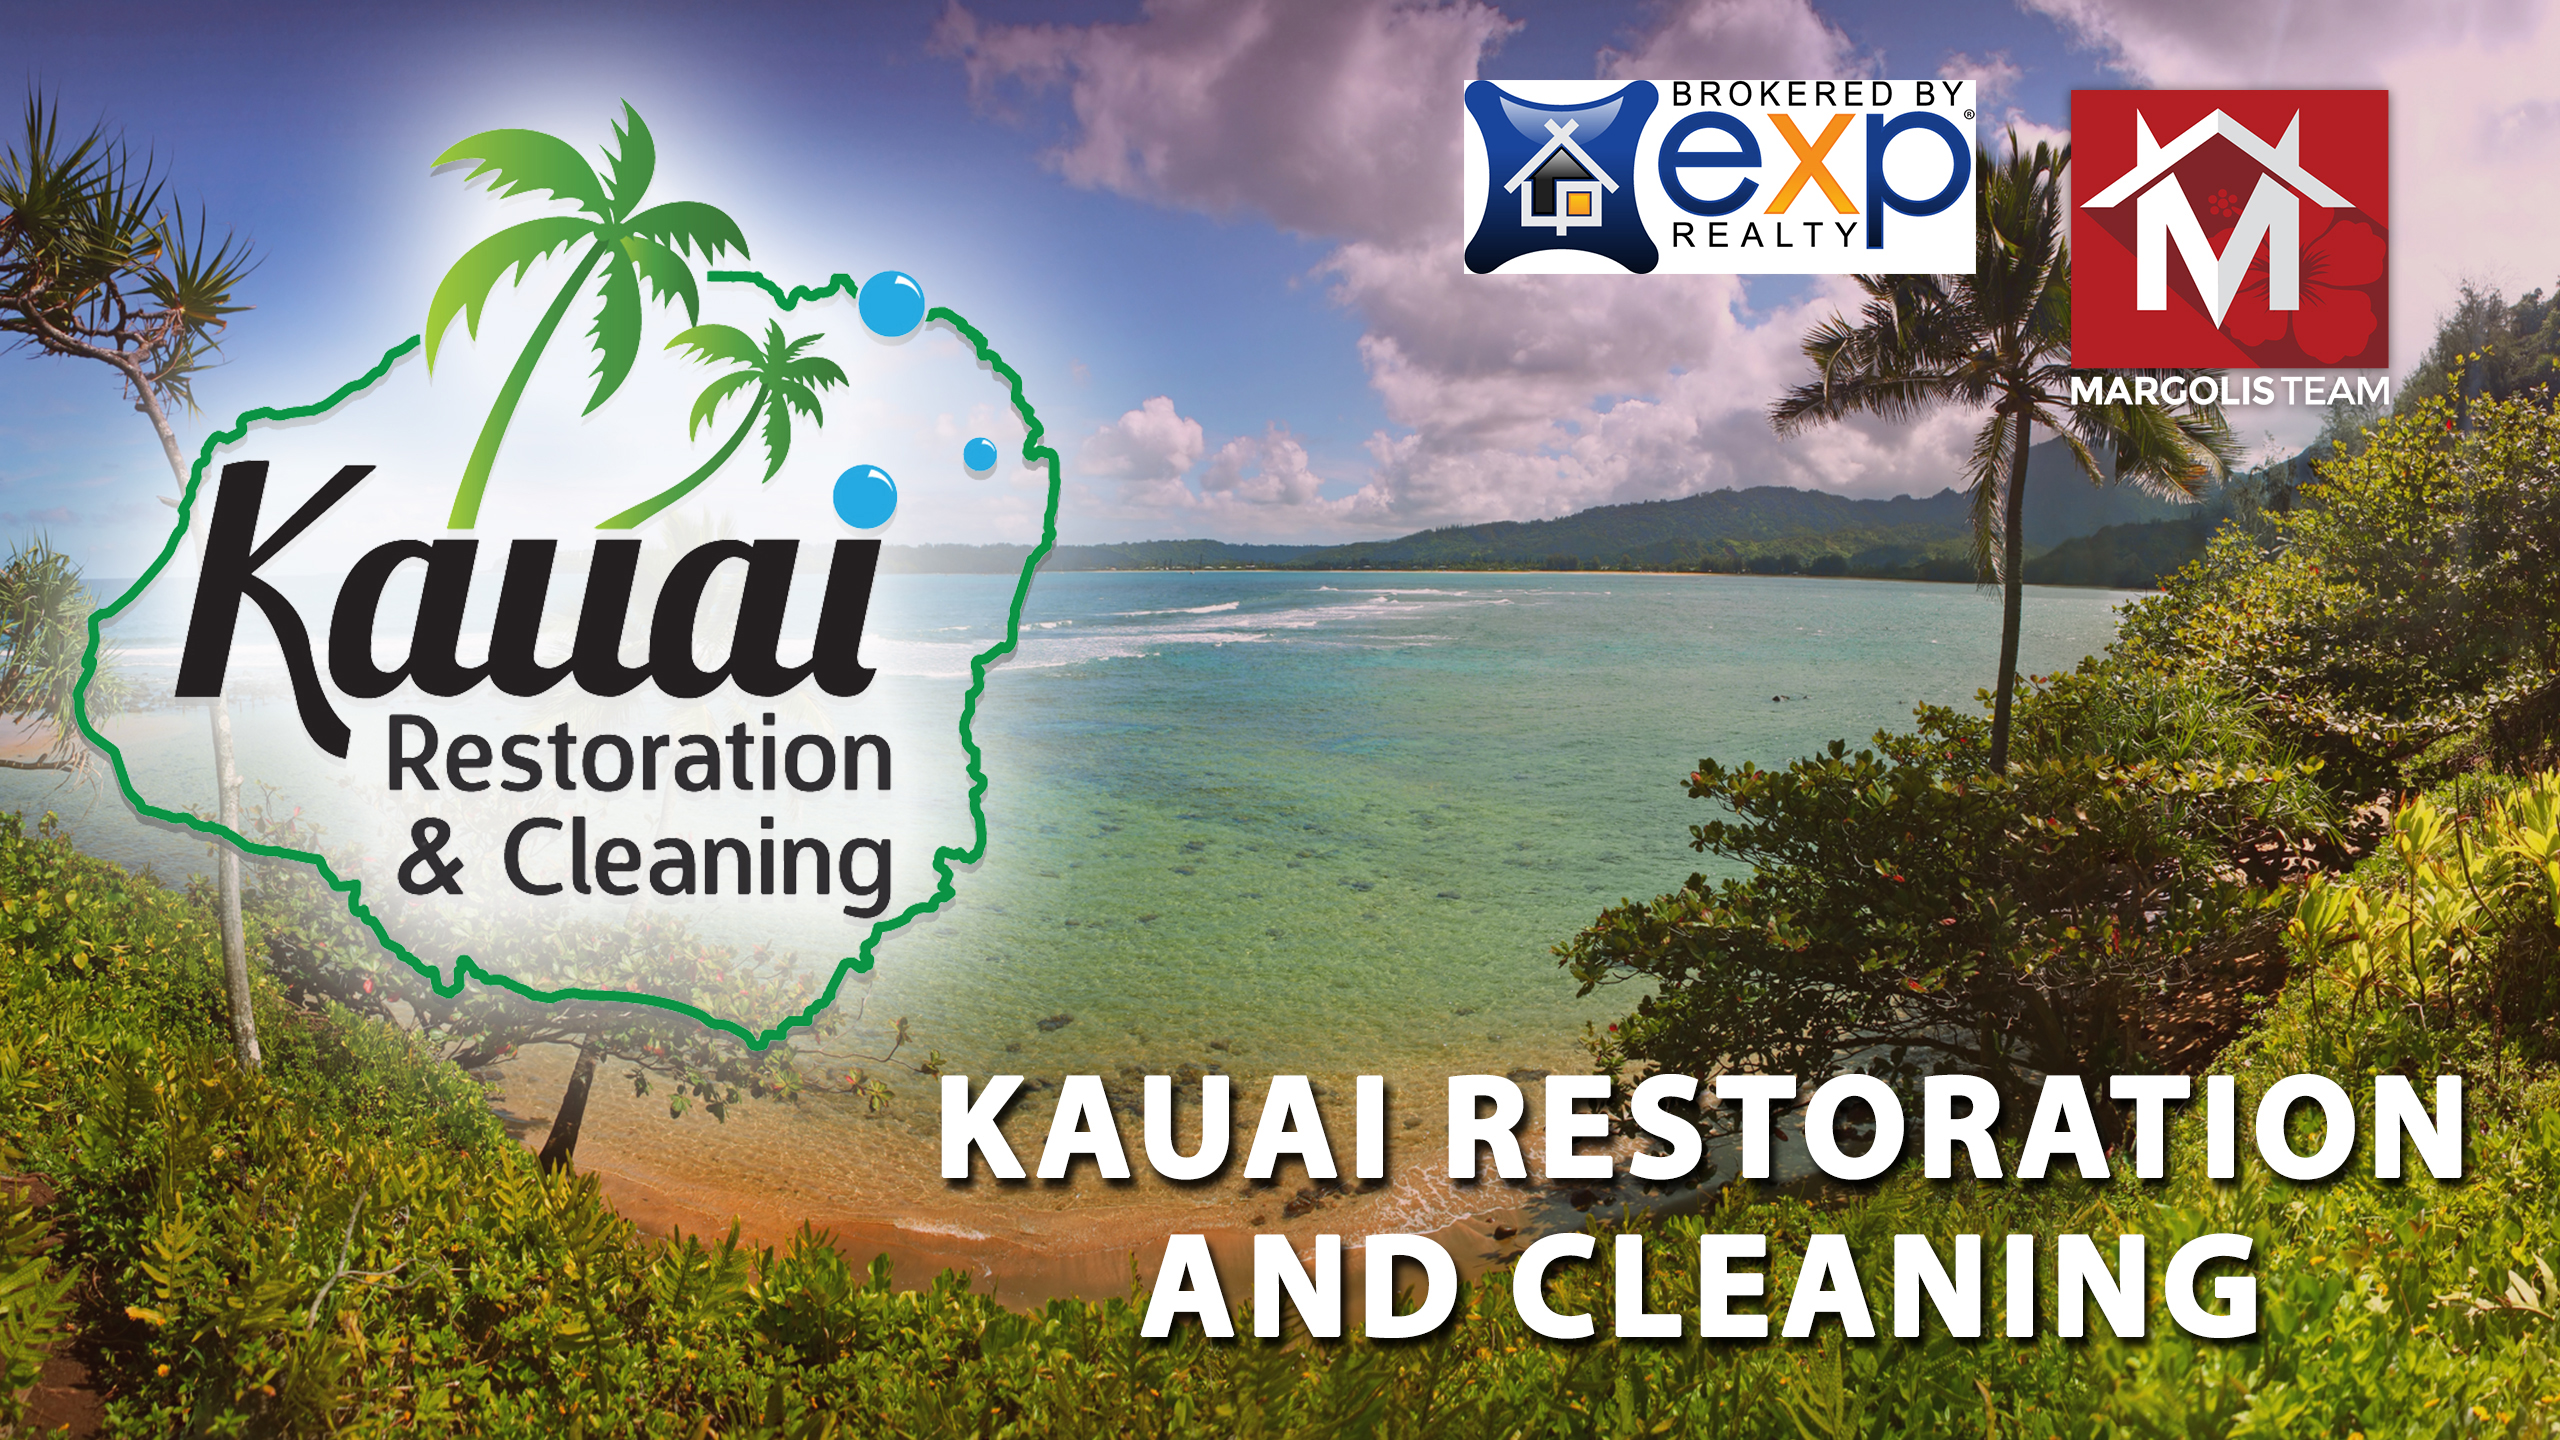 My Latest Vendor Spotlight, Featuring Kauai Restoration & Cleaning